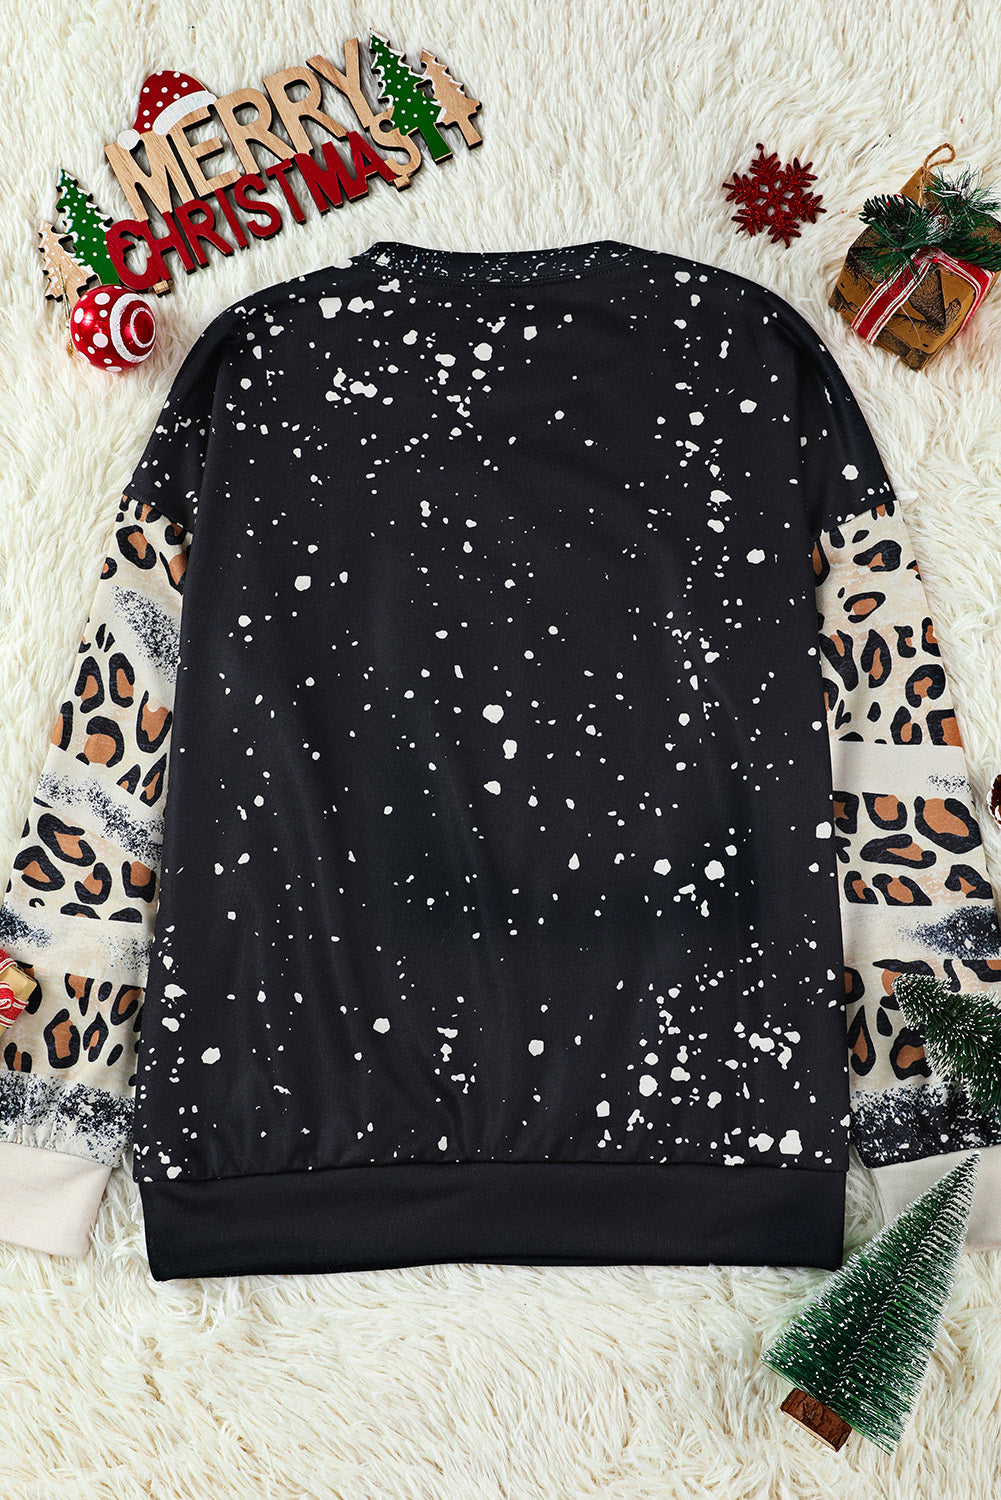 Black PRAY Letter Leopard Bleached Color Block Sweatshirt Graphic Sweatshirts JT's Designer Fashion